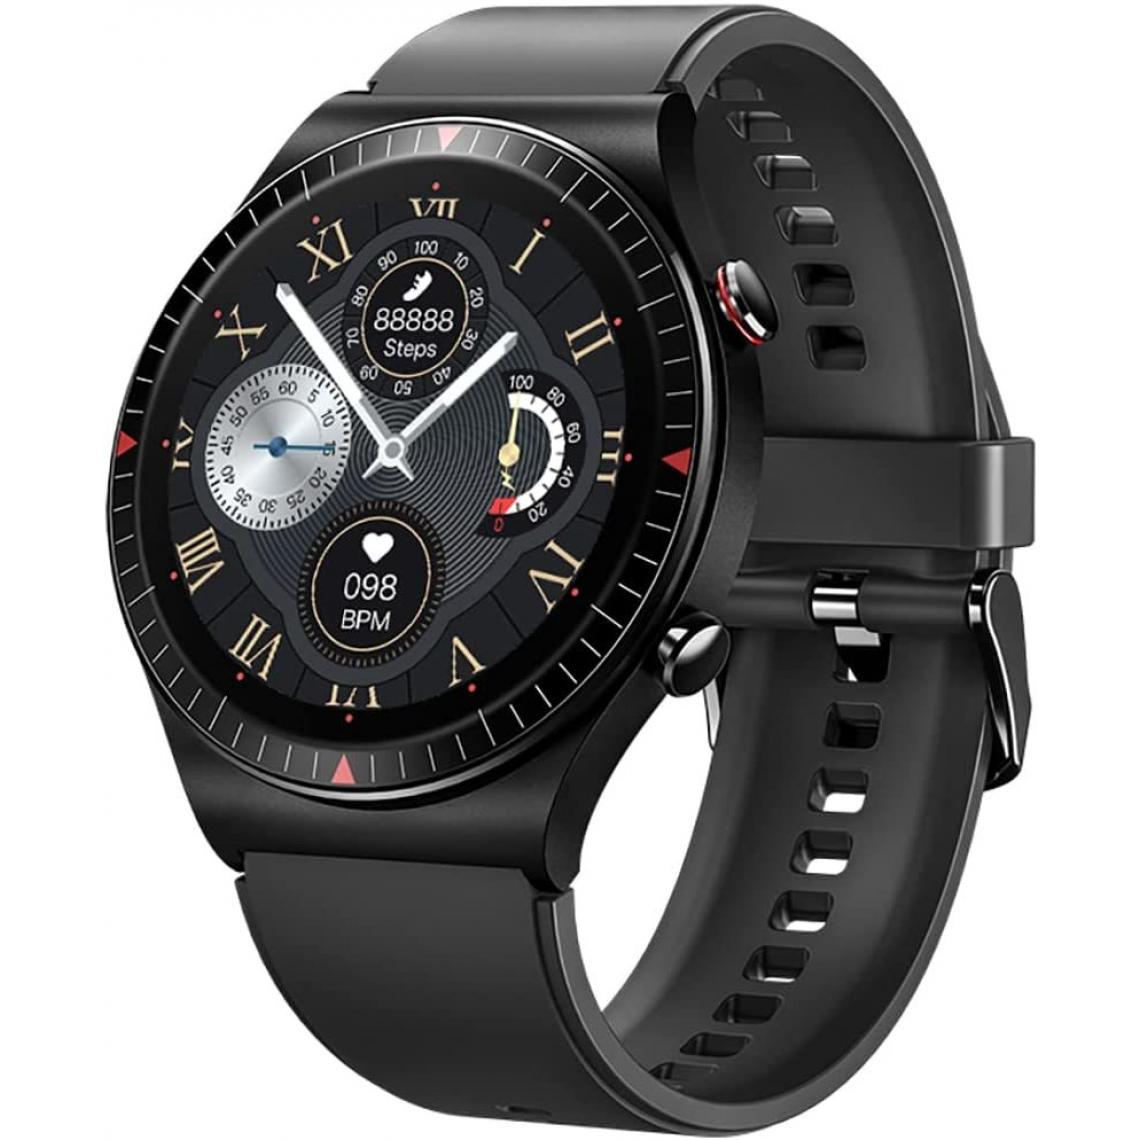 Chronotech Montres - Chronus Smartwatch Smartwatches IP67 Waterproof, 4GB Internal Sports Music Memory, 8 Training Modes, Pedometer, Sleep Monitor(black) - Montre connectée